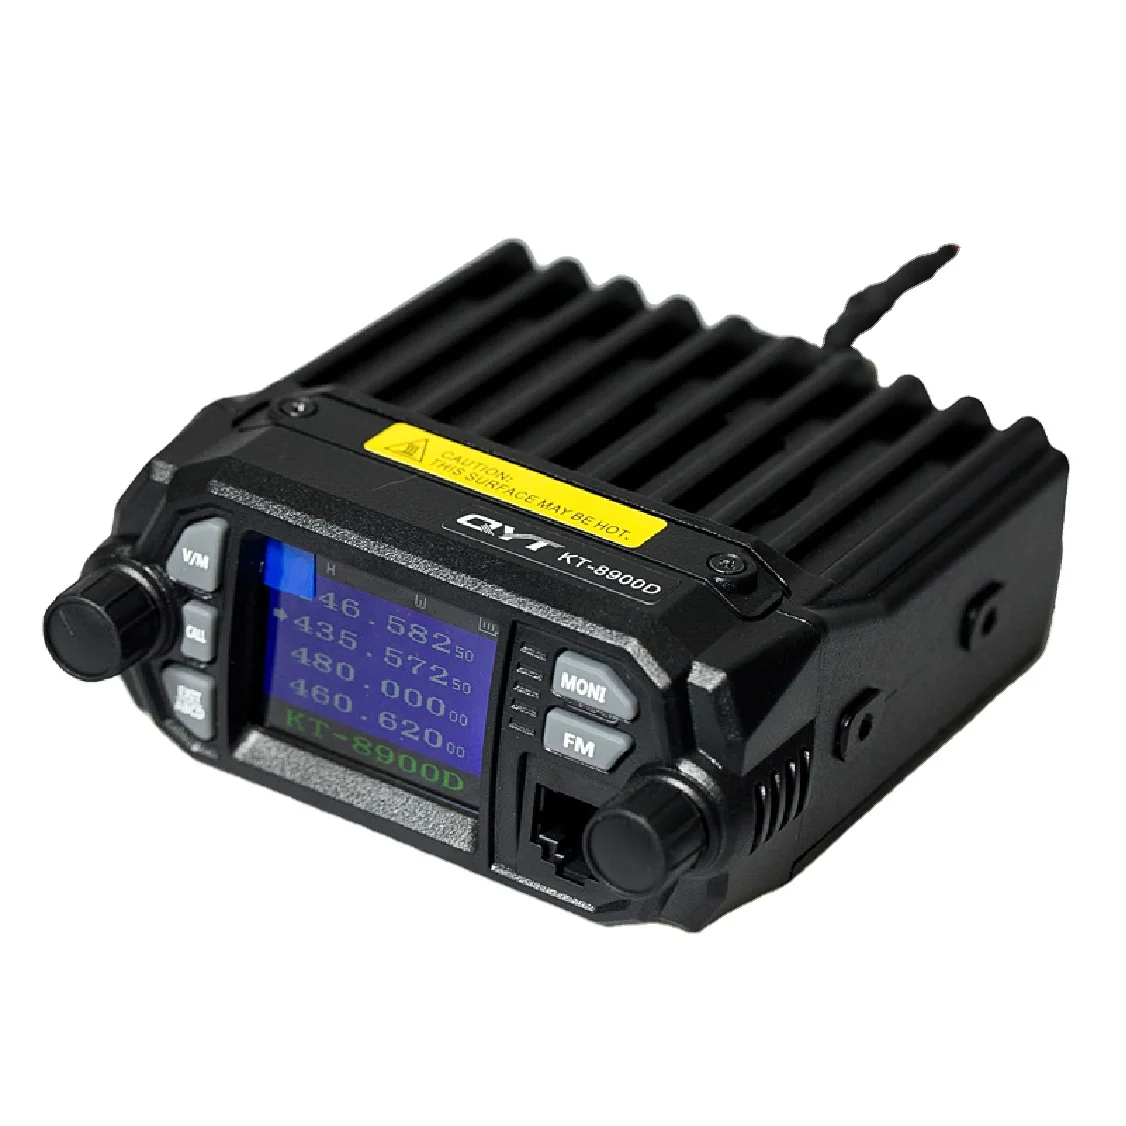 

QYT KT-8900D Dual Band Quad Standby Mini Car Radio 25W VHF UHF Upgrade Version of KT-8900